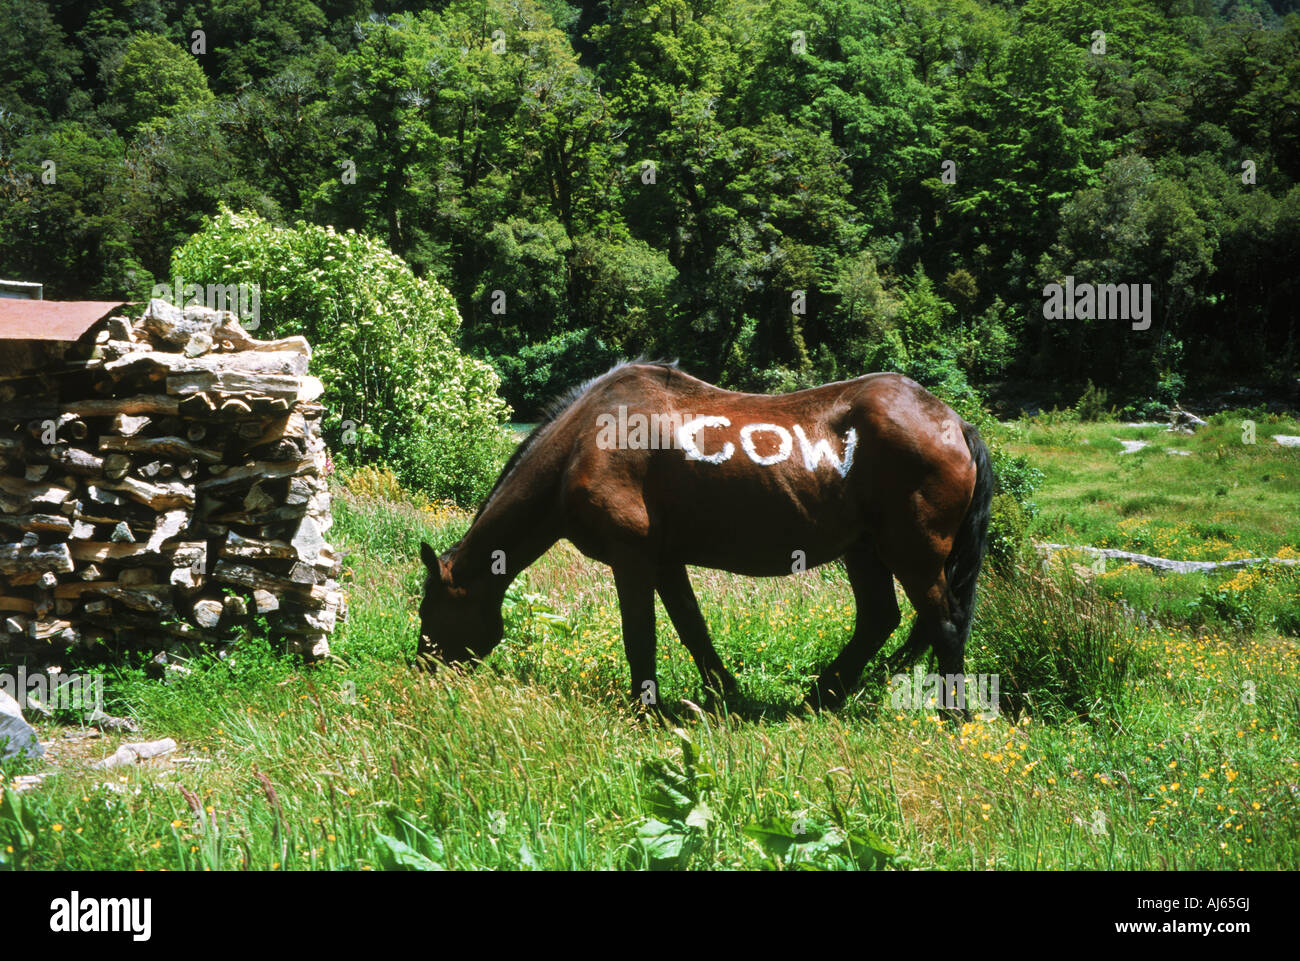 cow-sign-painted-on-side-of-horse-during-deer-hunting-season-in-california-AJ65GJ.jpg